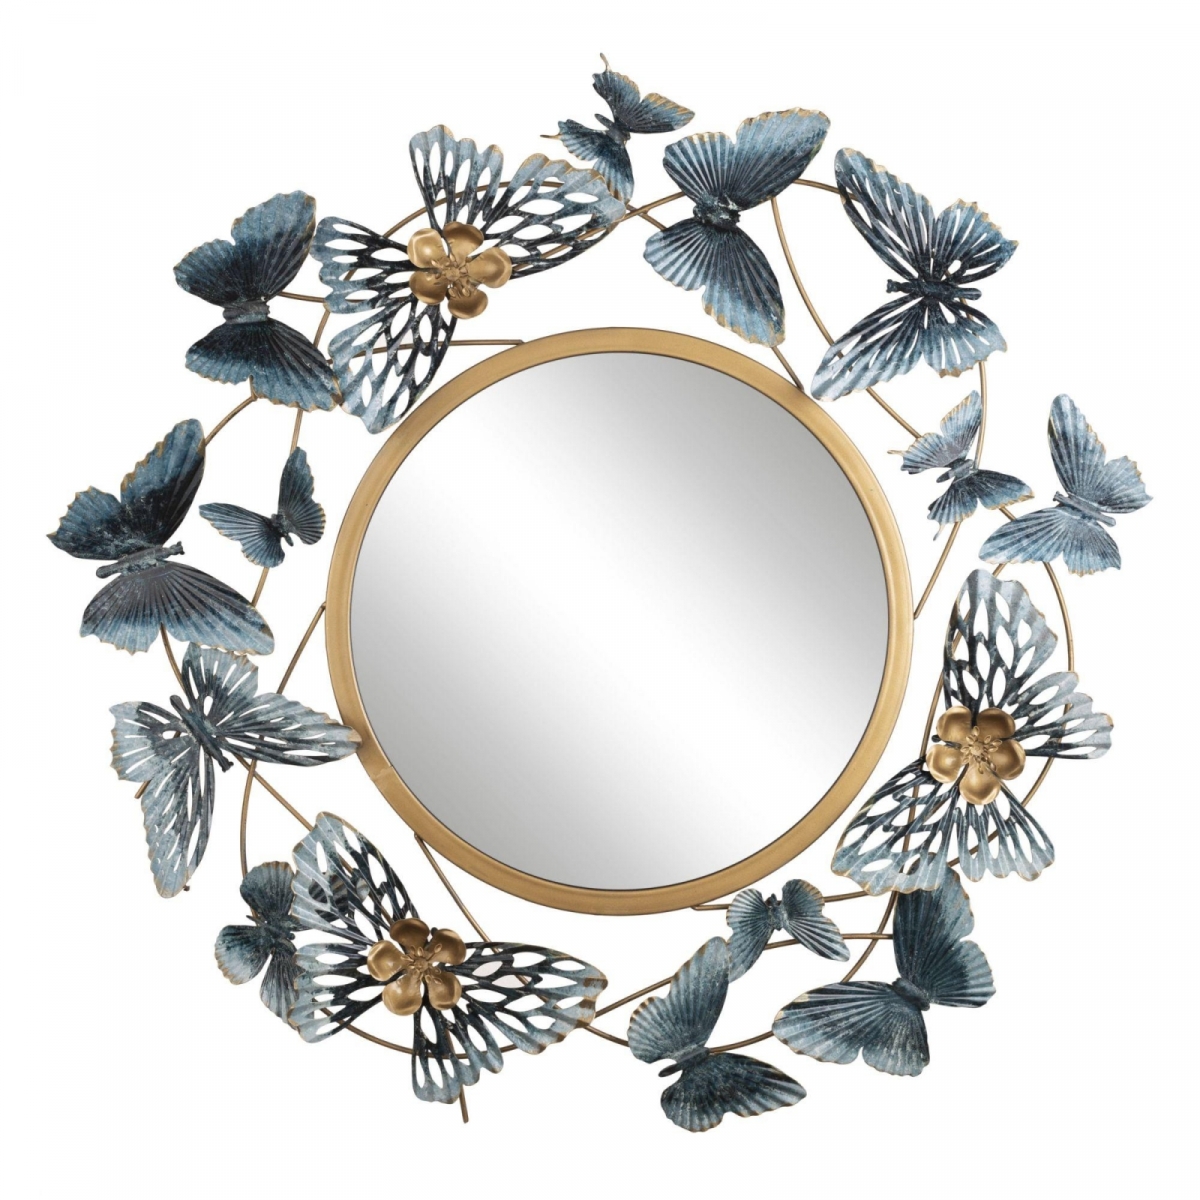 Декоративное настенное панно с зеркалом Tomas Stern 93062